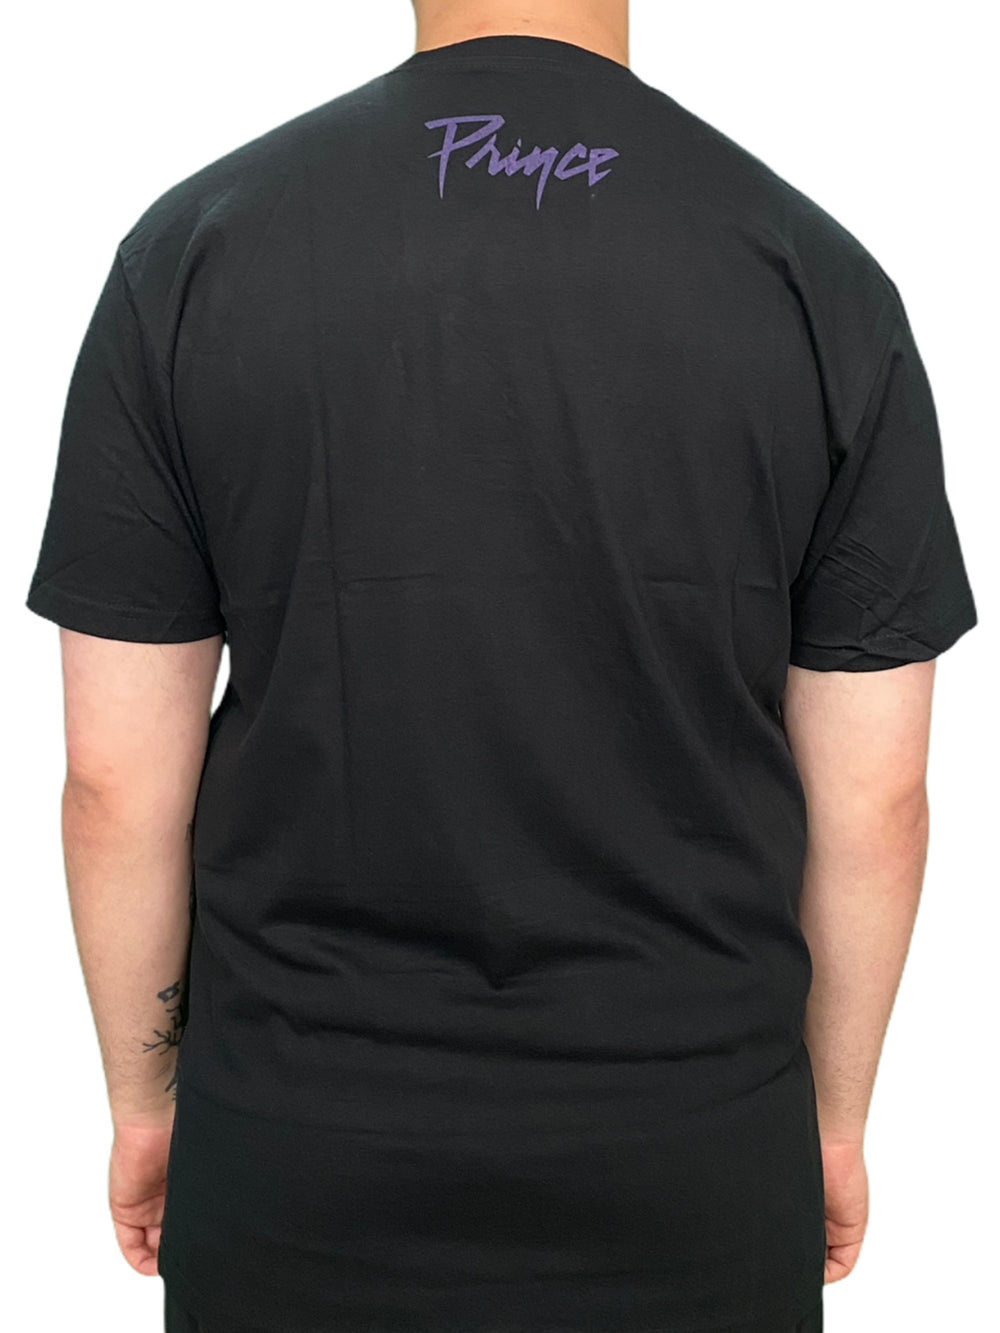 Prince Official Martin Homent Artwork Purple Rain Unisex T Shirt LARGE